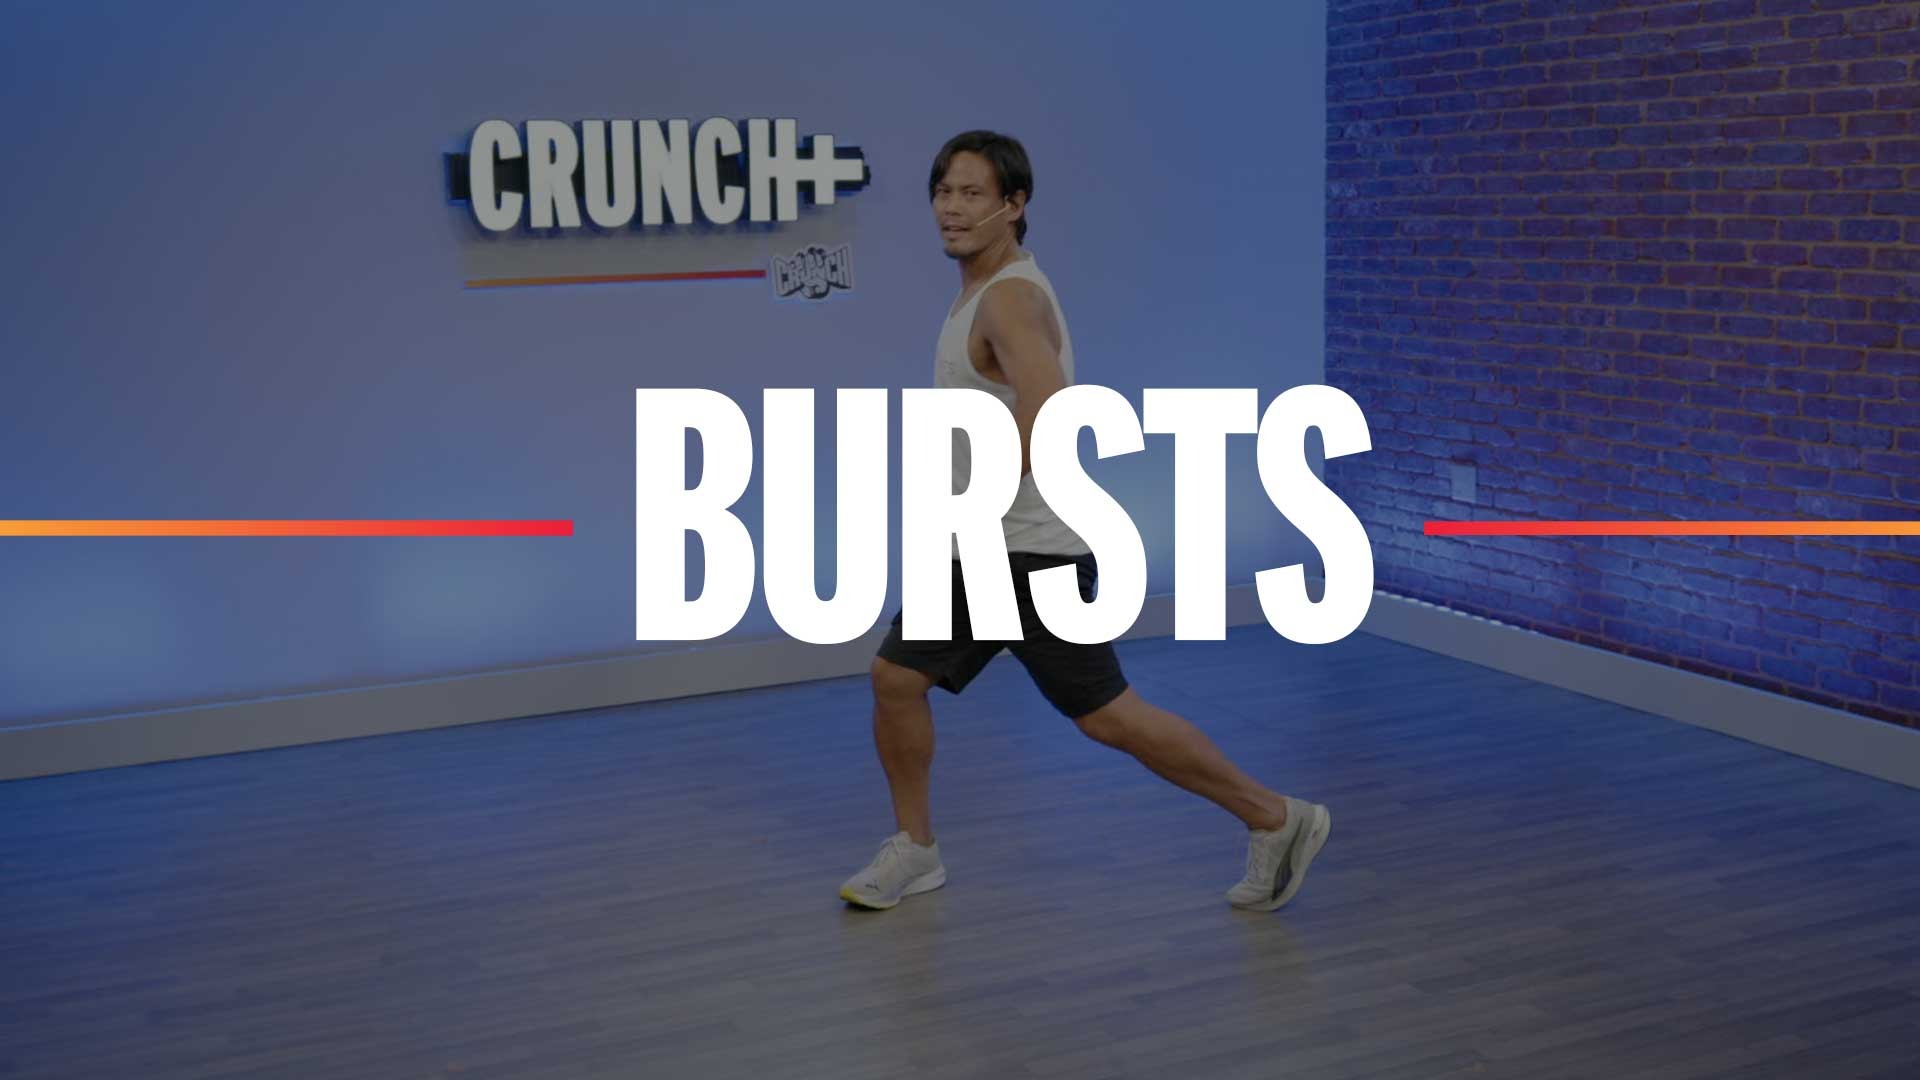 Bursts! by Crunch+